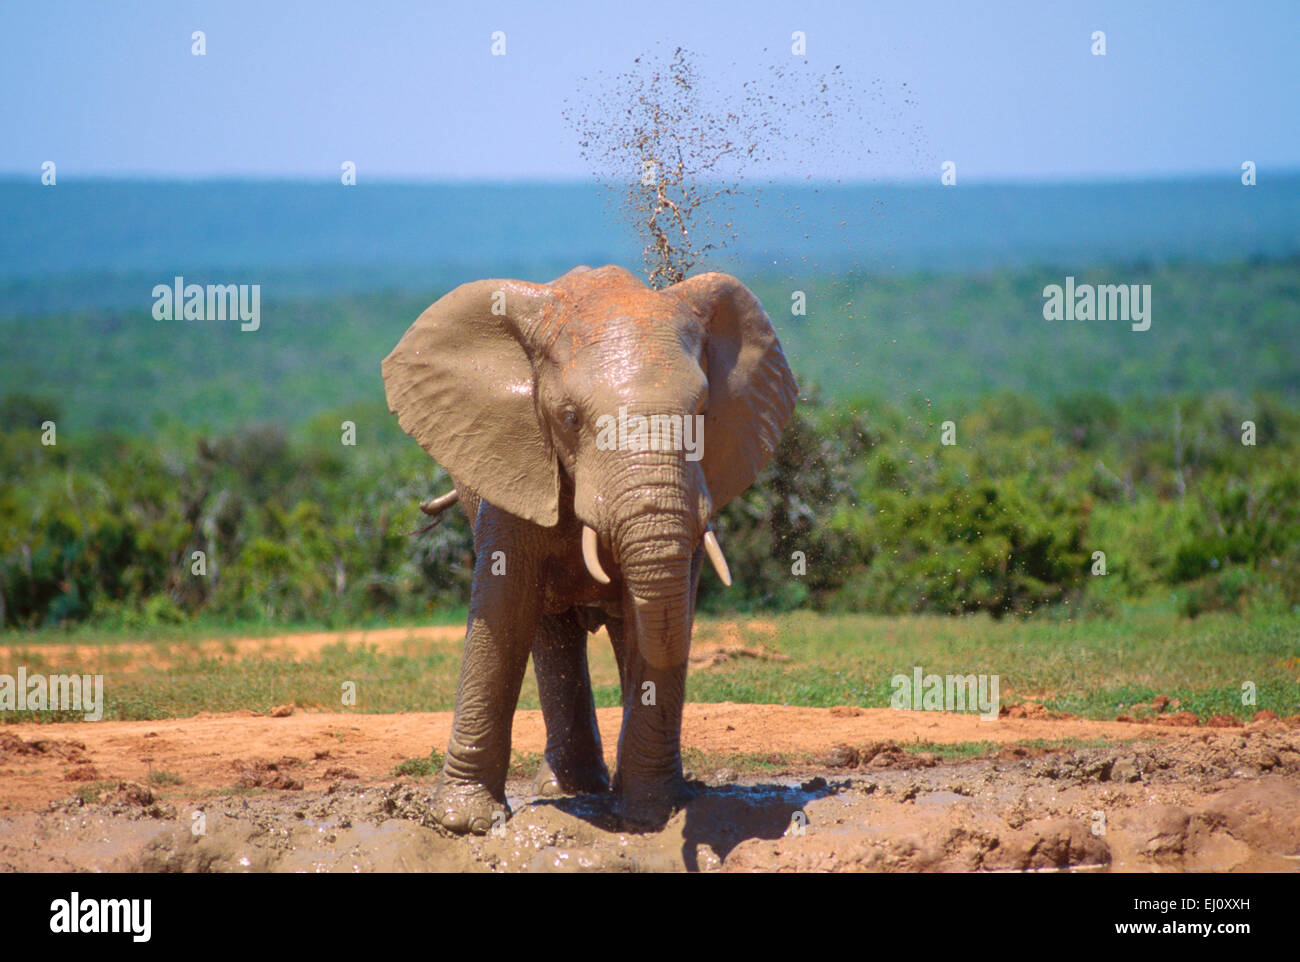 Afrikanischer Elefant, Loxodonta Africana Elephantidae, Wasser im großen und ganzen Baden, Elefanten, Säugetier, Tier, Addo Elephant, Nationalpark, Stockfoto